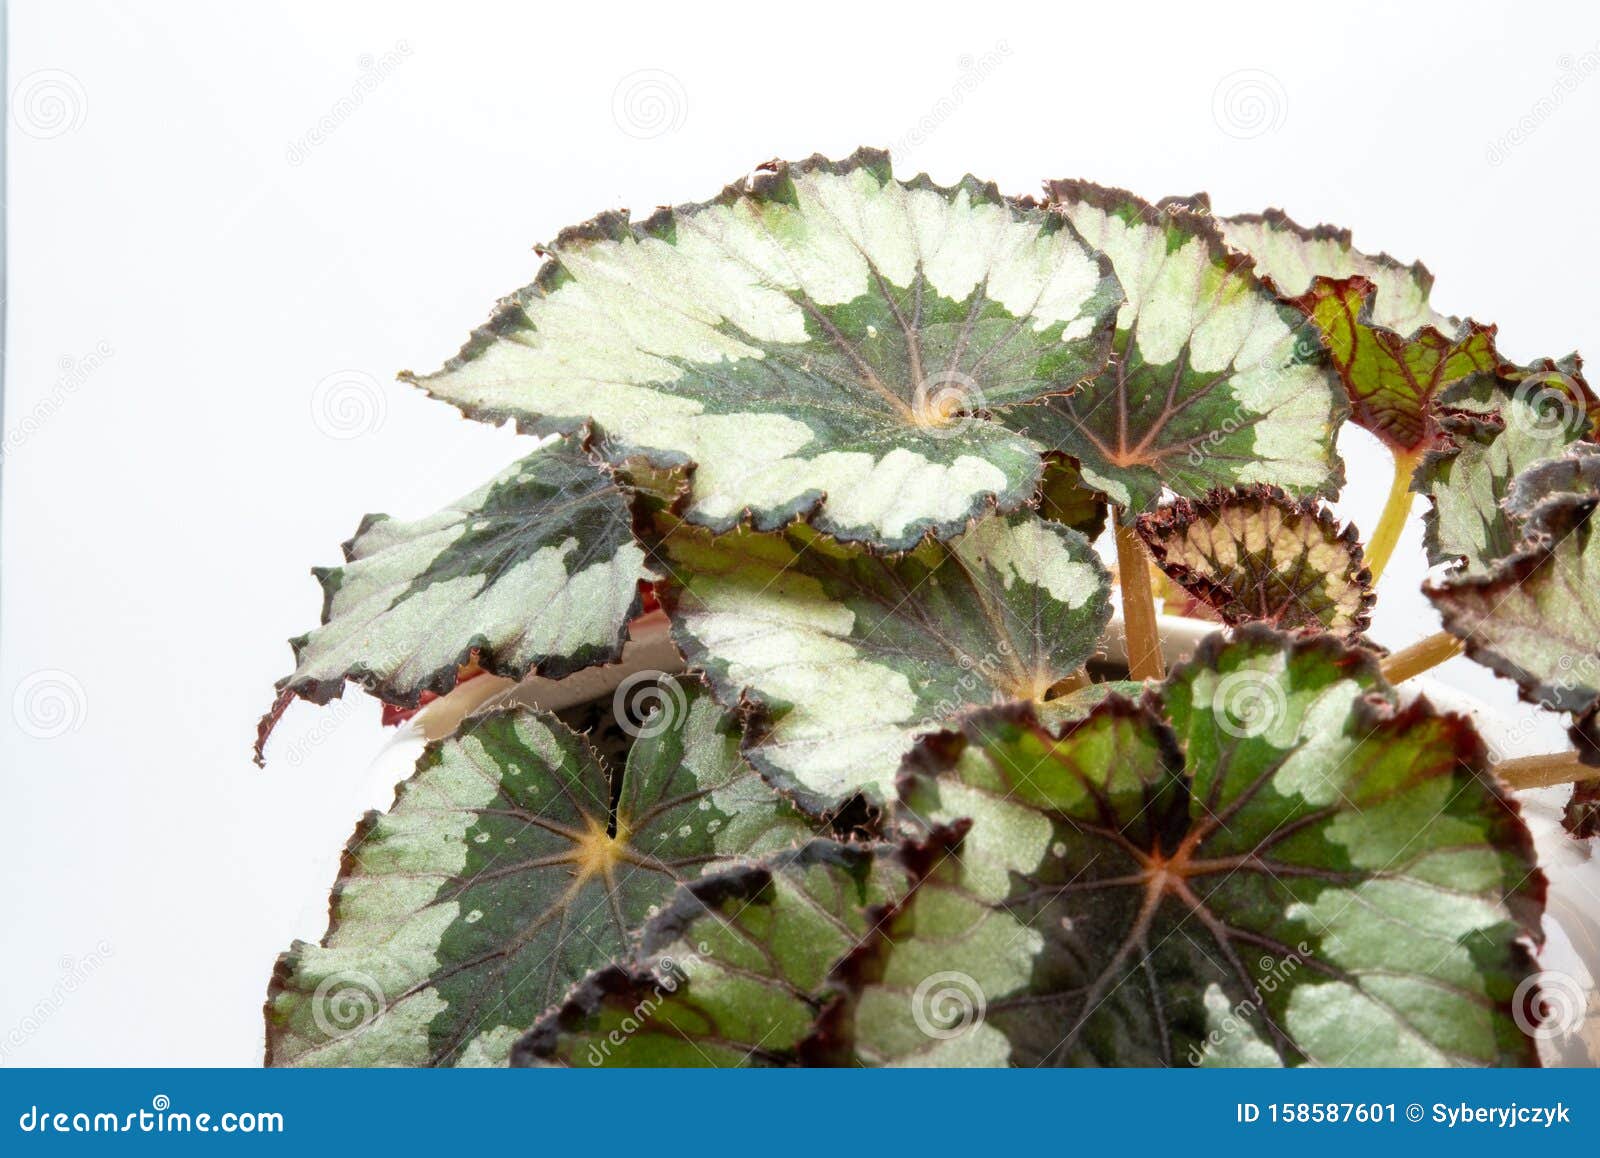 Leaf of begonia stock image. Image of plant, leaf, genus - 158587601